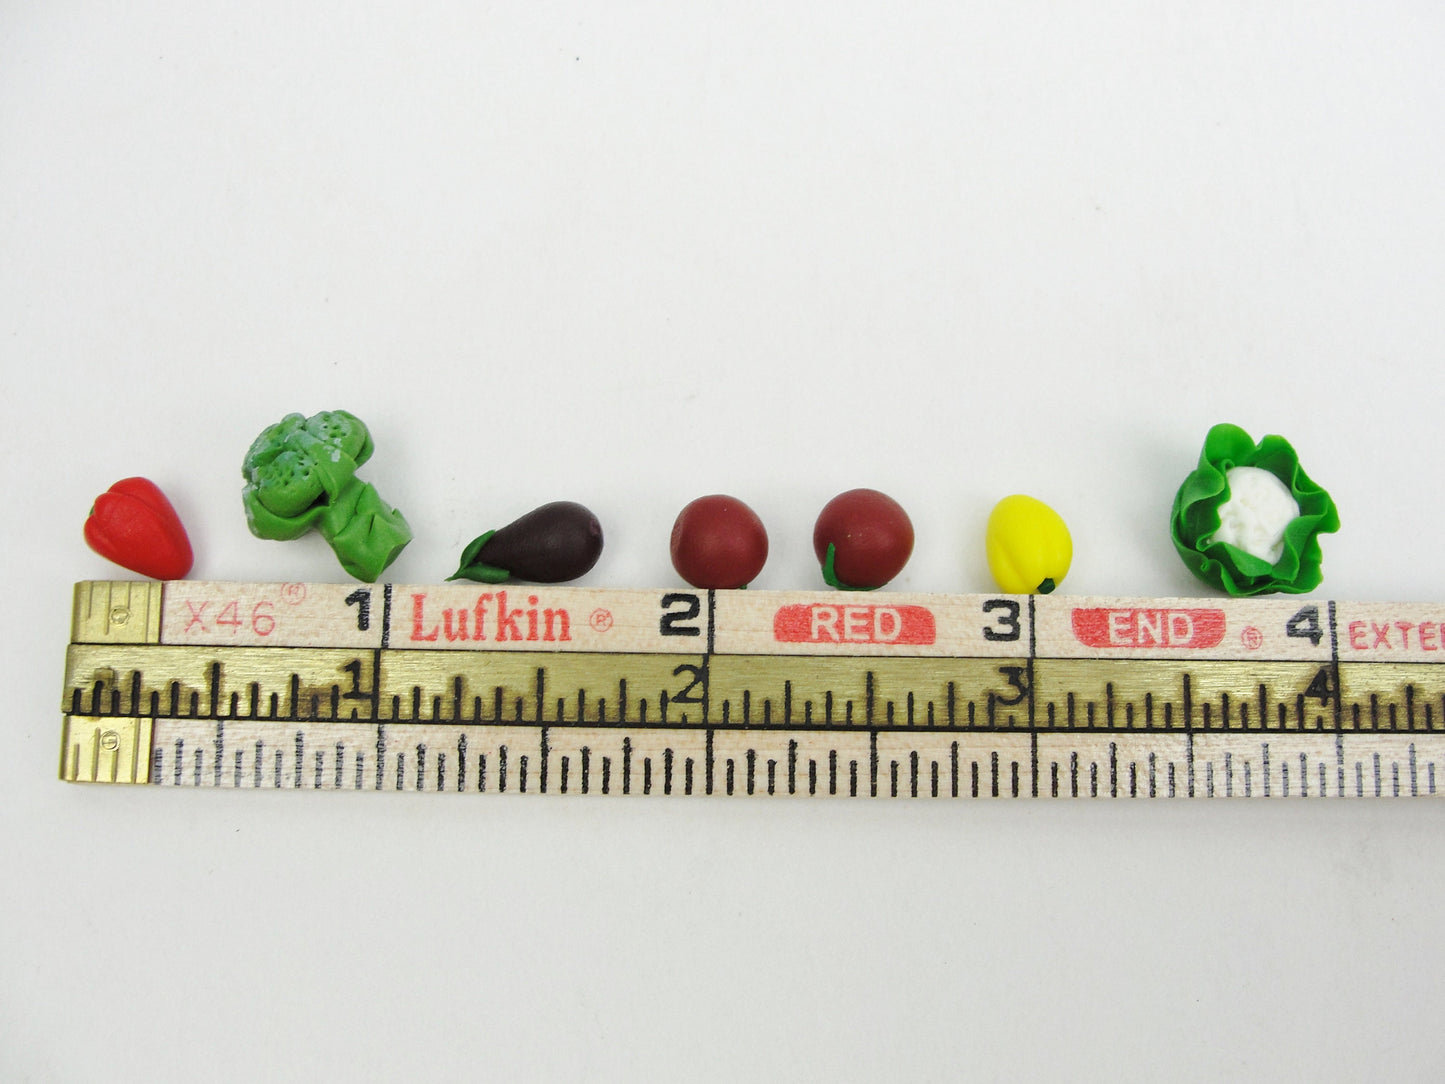 Dollhouse miniature fruit or vegetables you choose